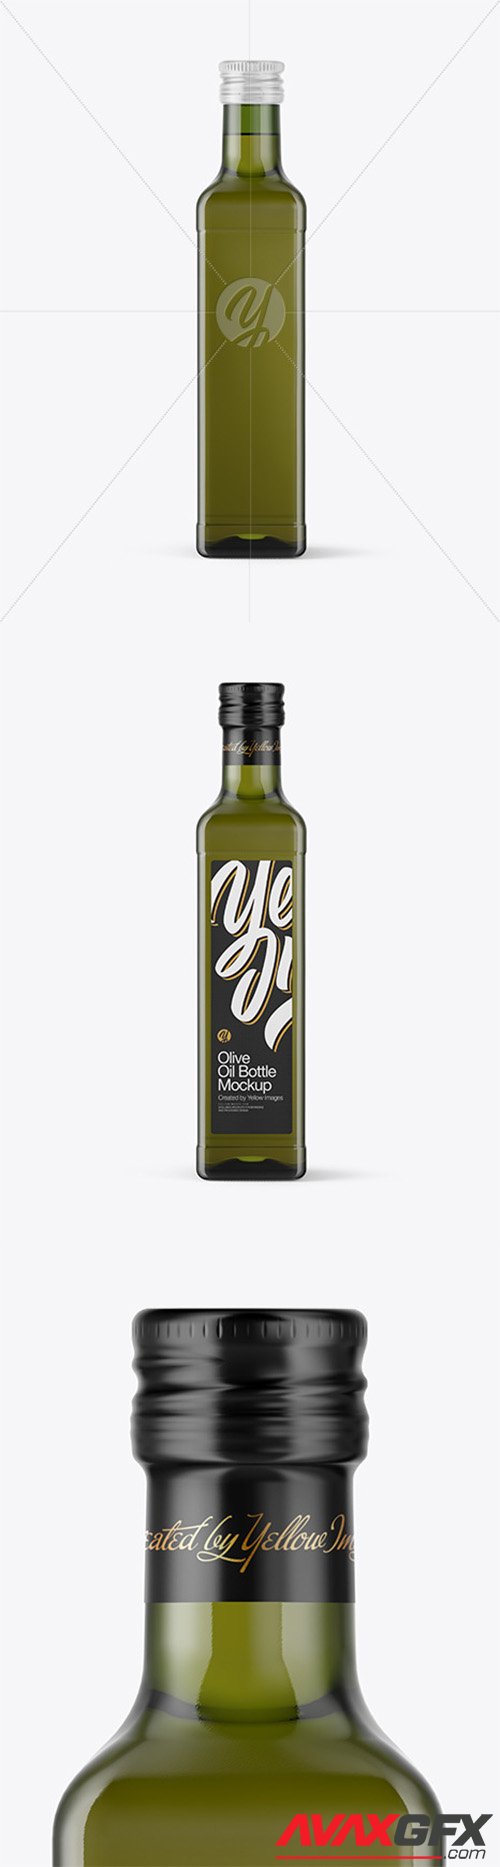 Green Glass Olive Oil Bottle Mockup 46636